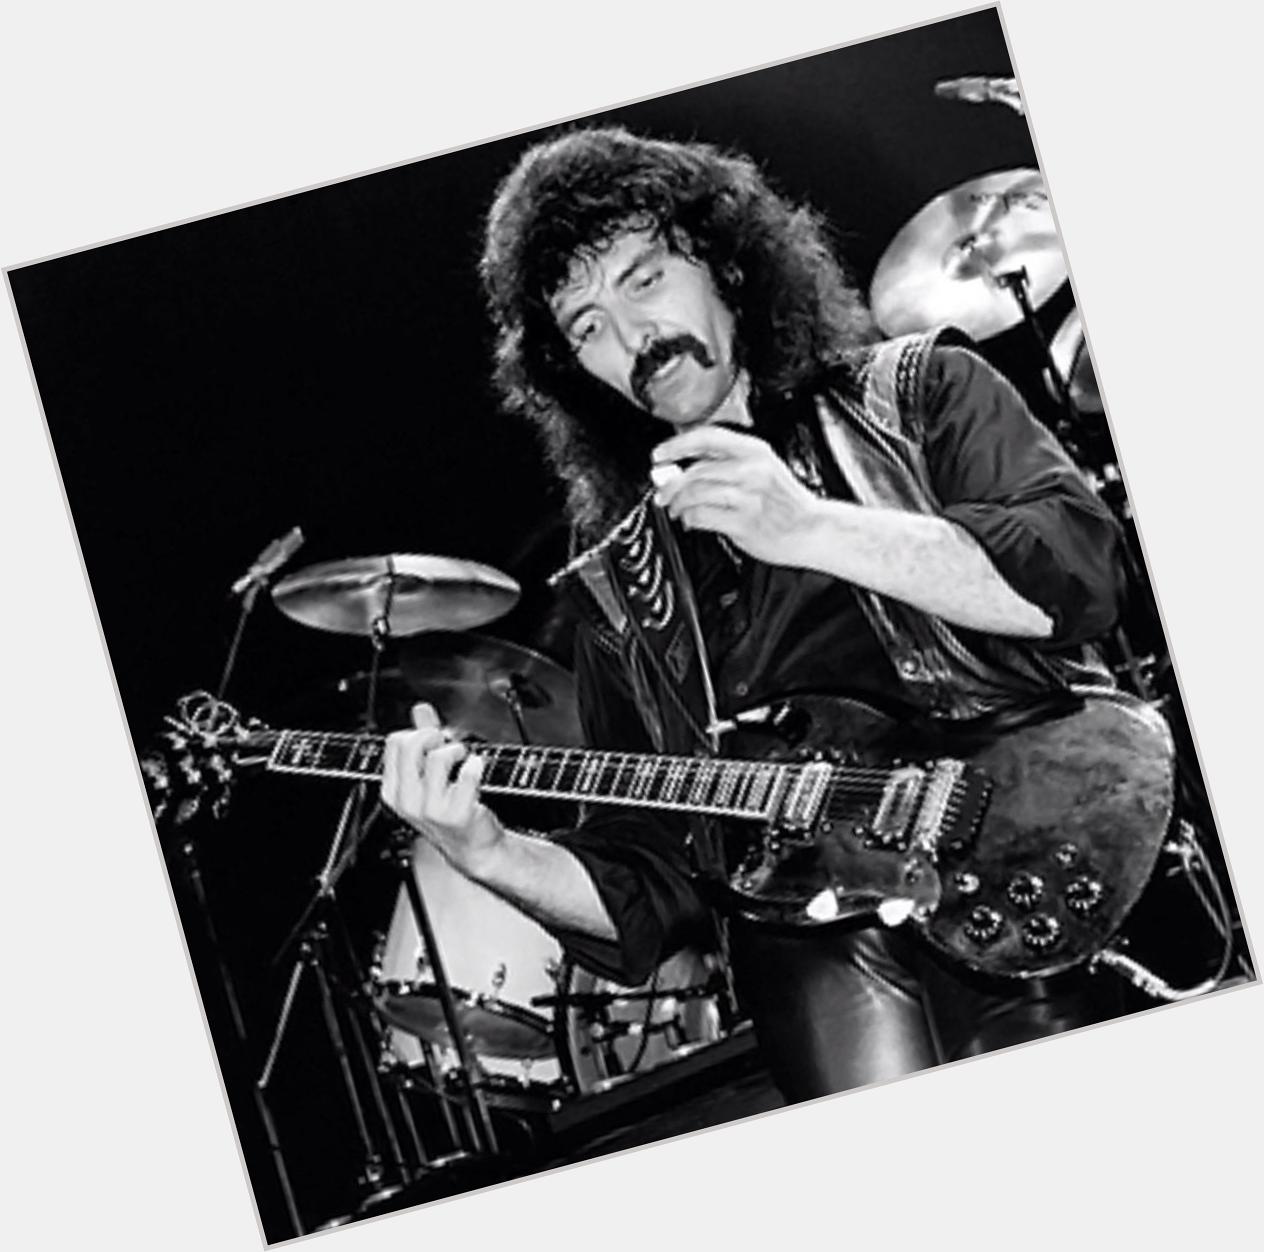 2/19/1948 Happy Birthday, Tony Iommi, guitarist, songwriter and
founding member of Black Sabbath 